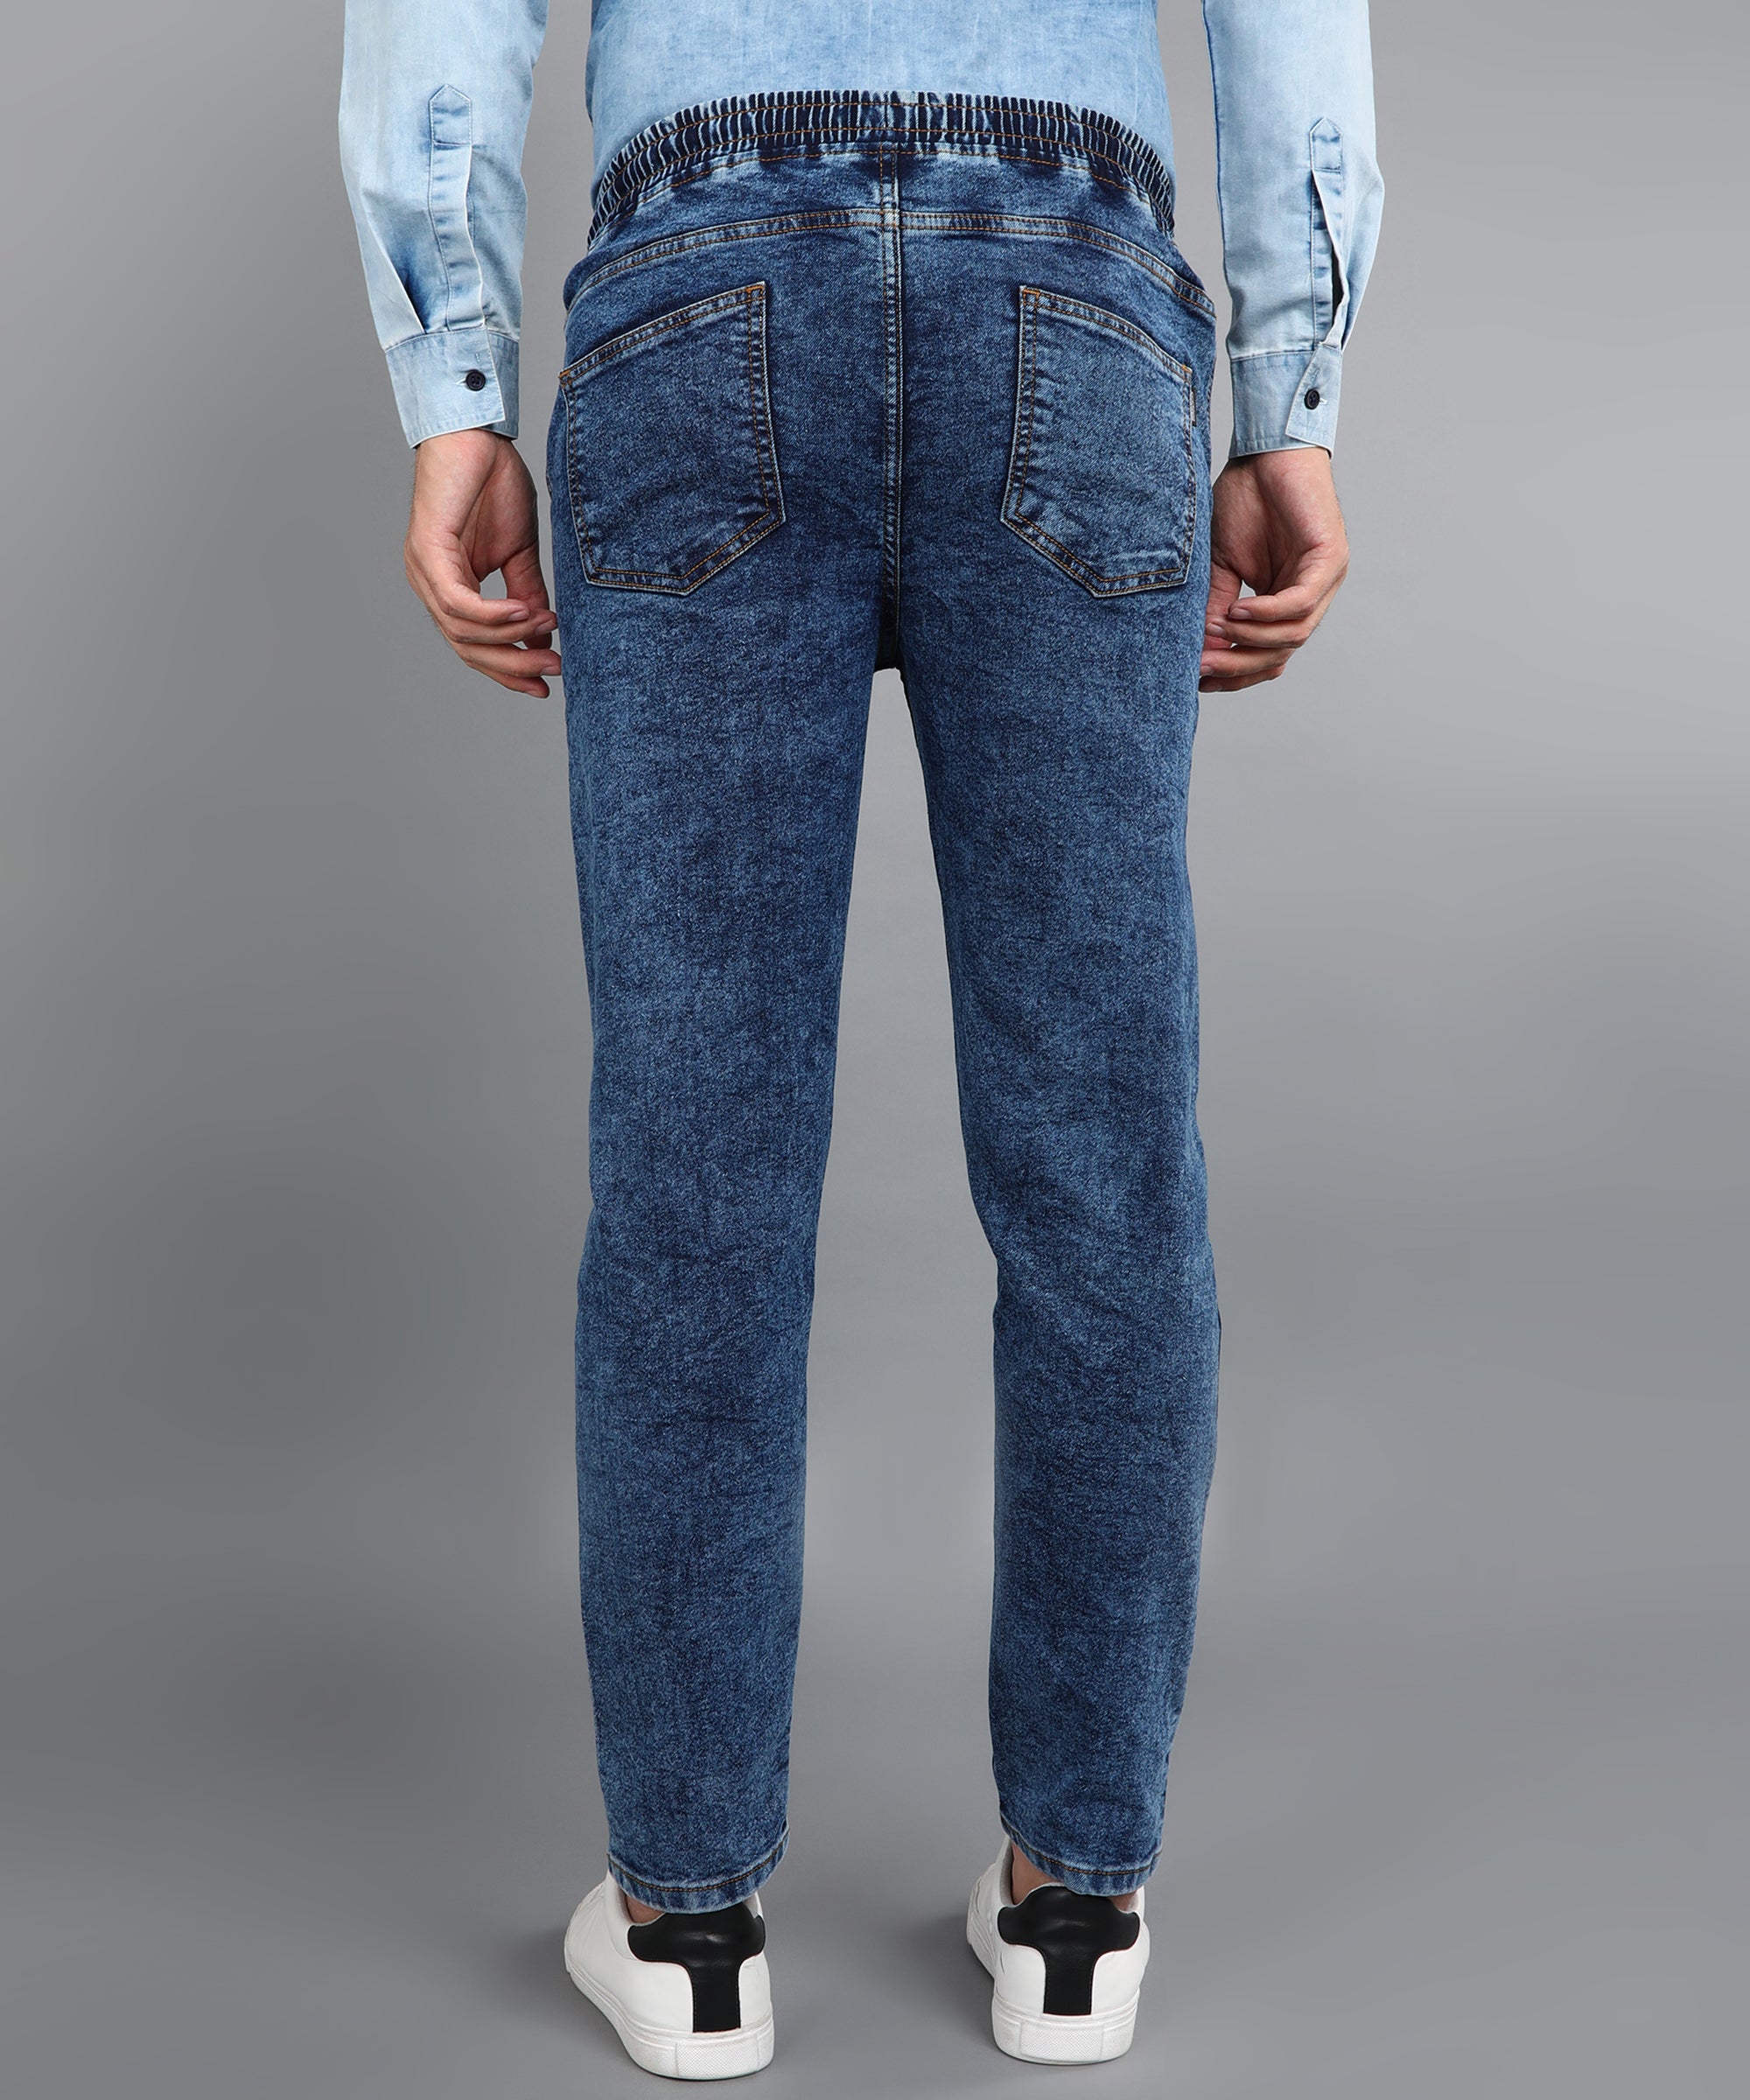 Urbano Fashion Men's Dark Blue Regular Fit Washed Jogger Jeans Stretchable